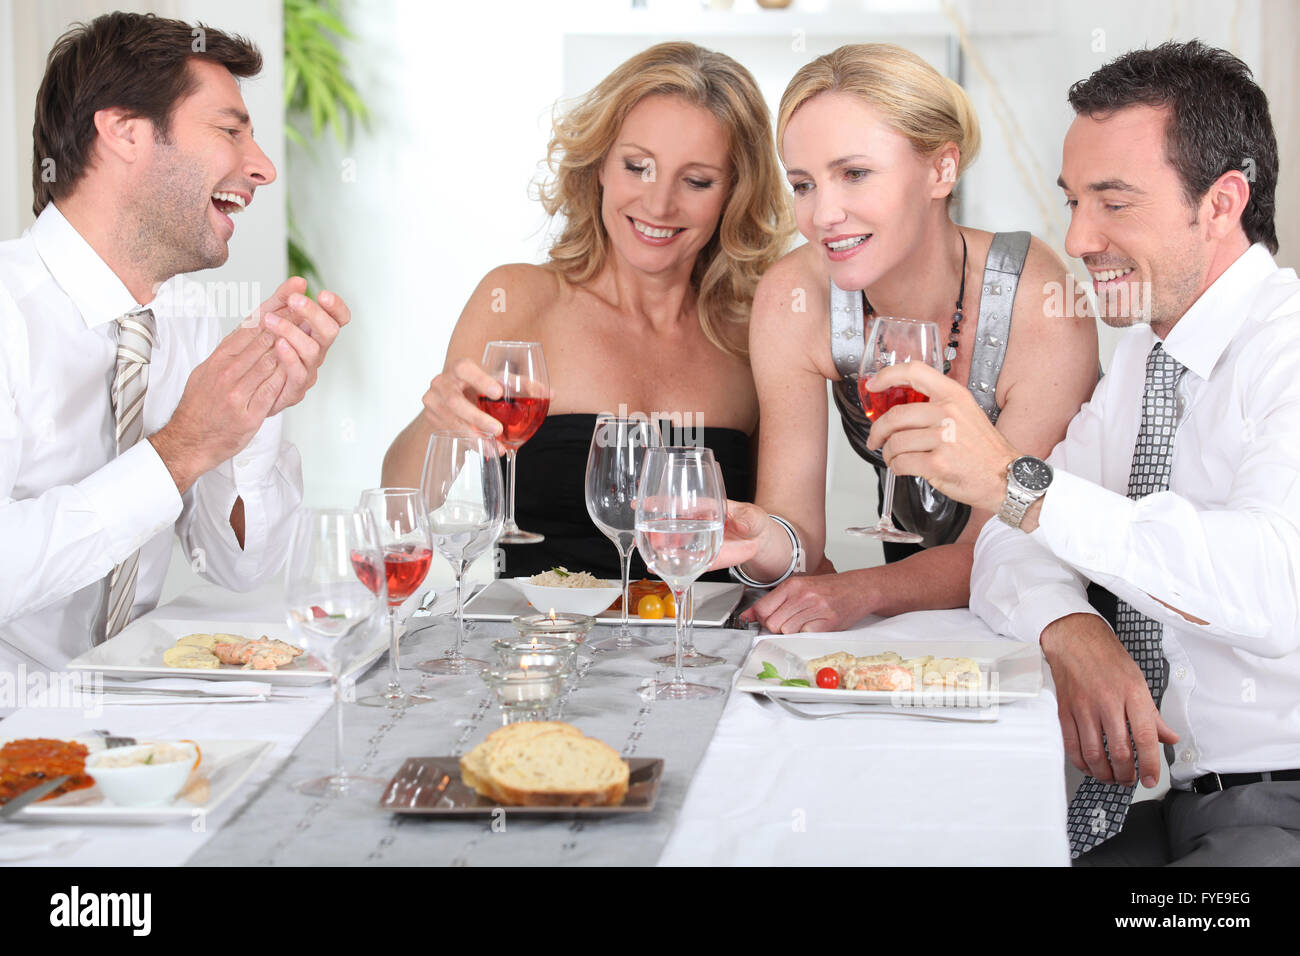 Four joyful people at the start of a posh dinner. Stock Photo